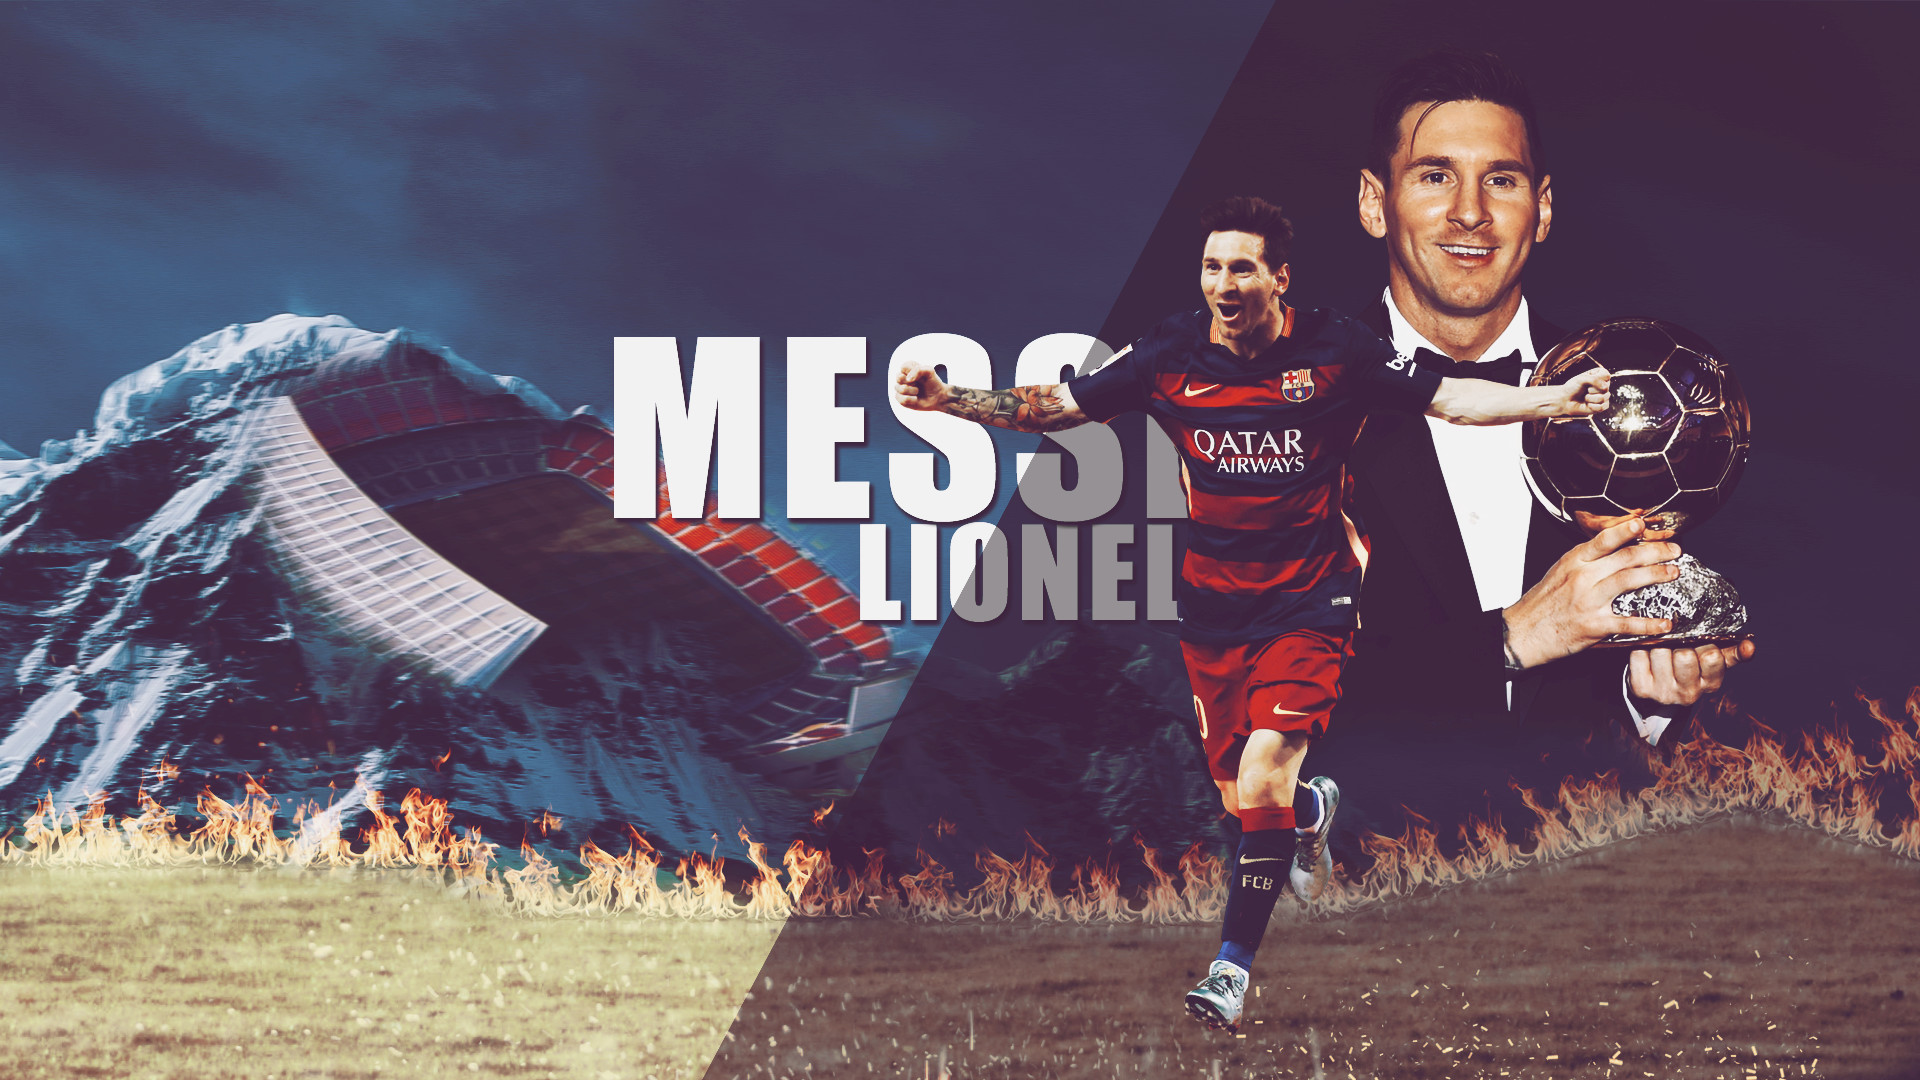 Lionel Messi Wallpaper 2018 70 Pictures